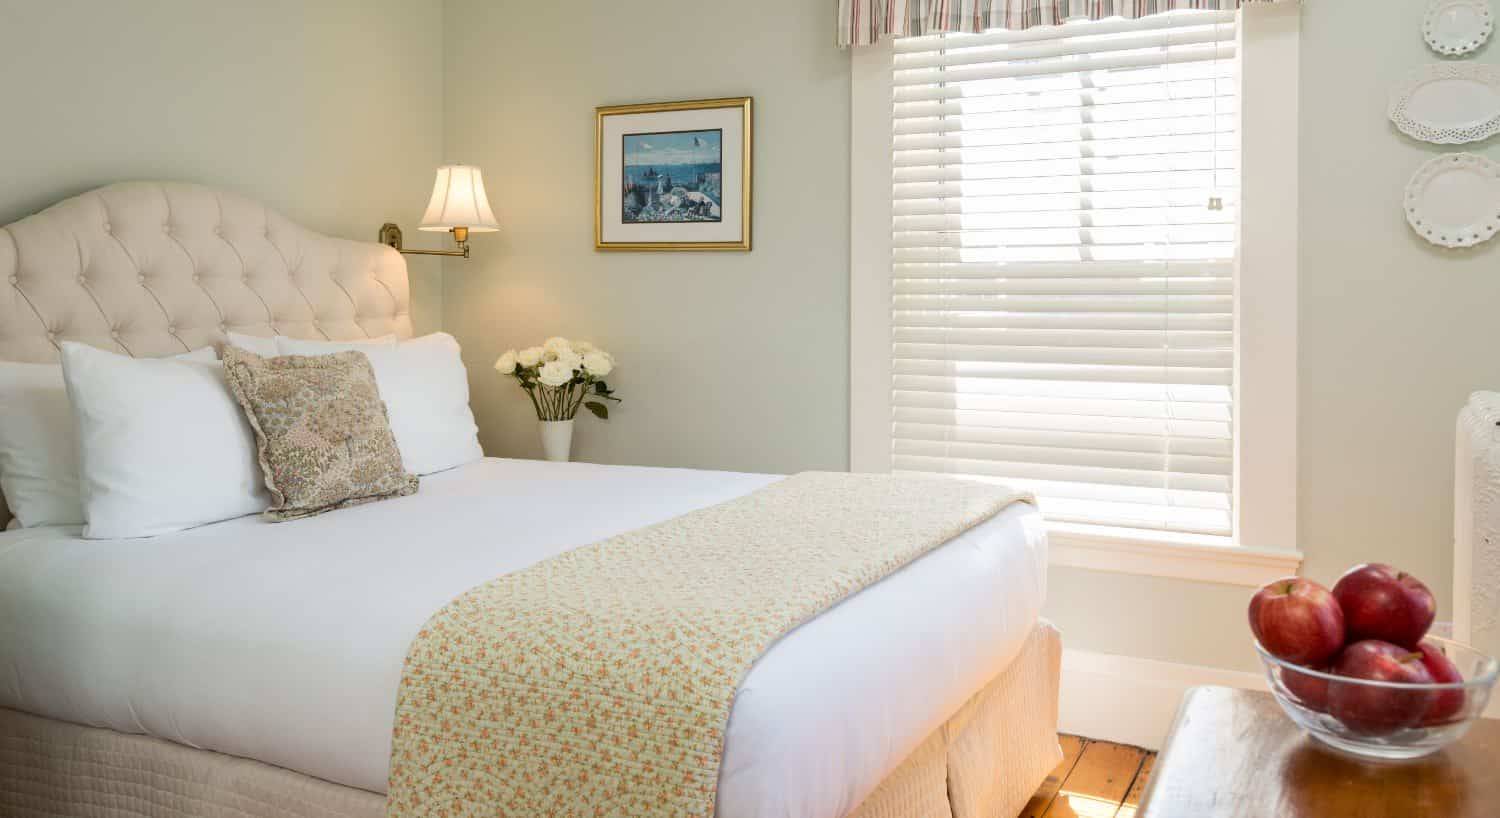 Bedroom with wooden flooring, light green walls, cream upholstered headboard, white bedding, and dark wooden dresser